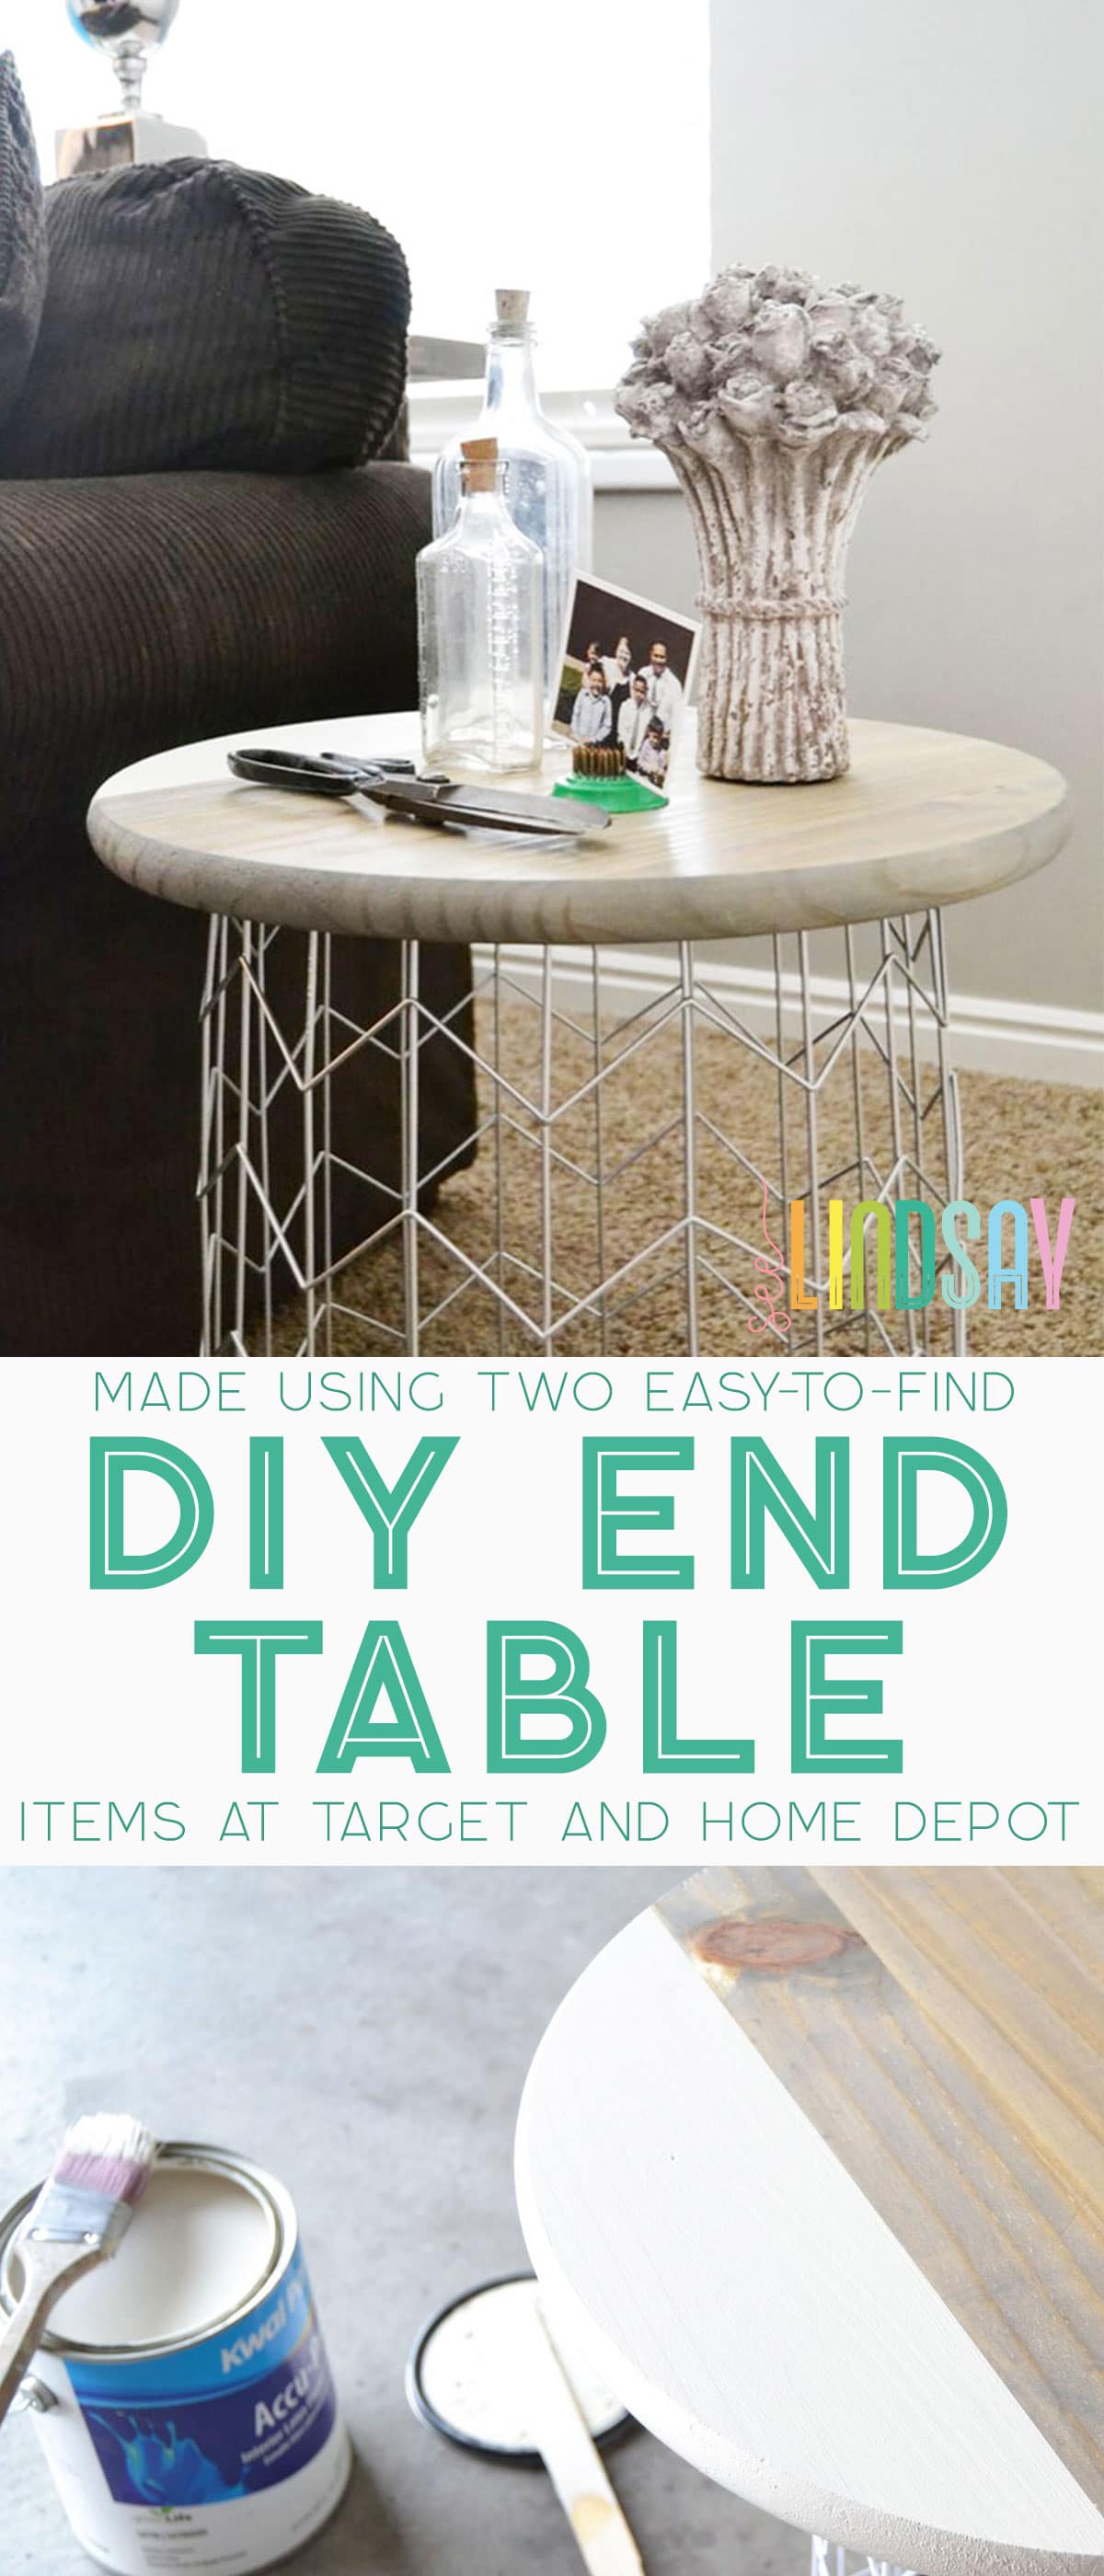 diy end table Pinterest